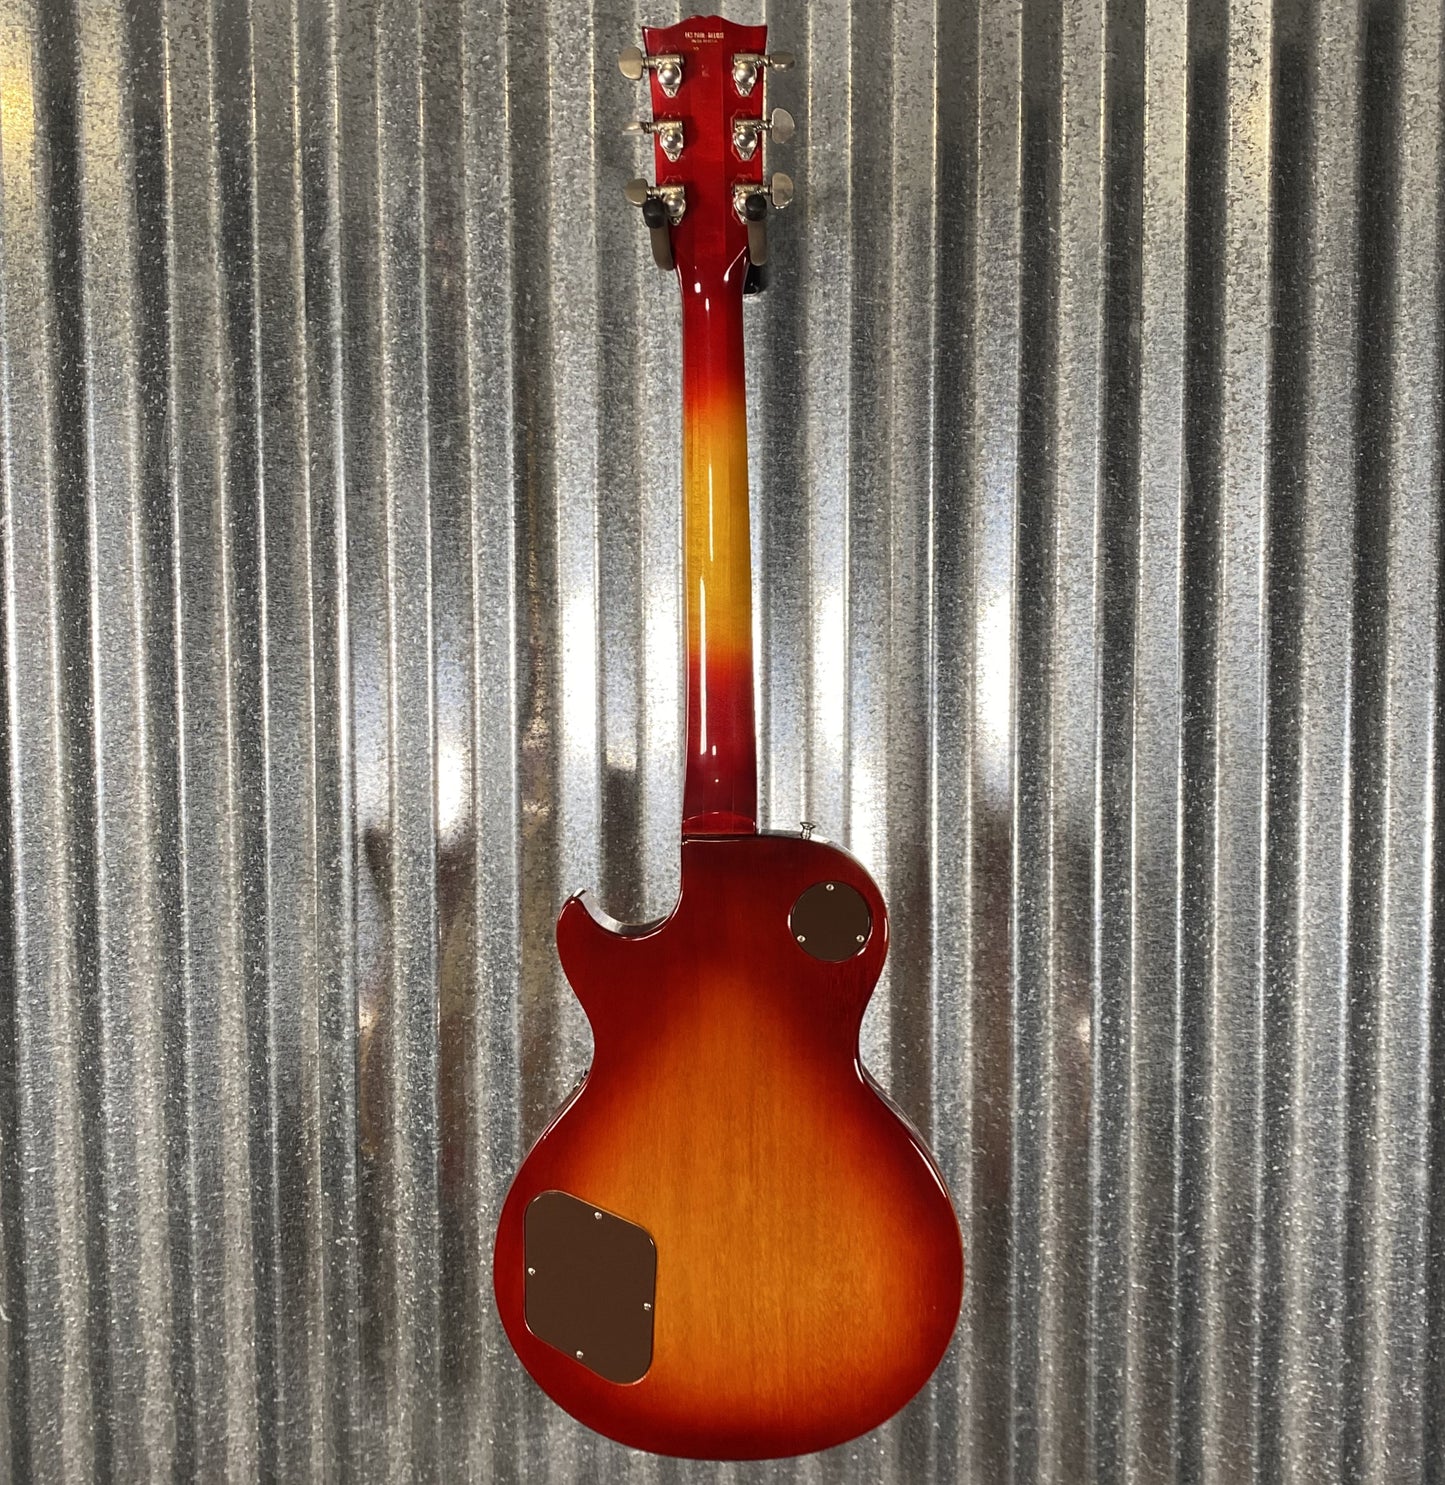 Gibson USA 1975 Les Paul Deluxe Cherry Sunburst Guitar & Case #7611 Used